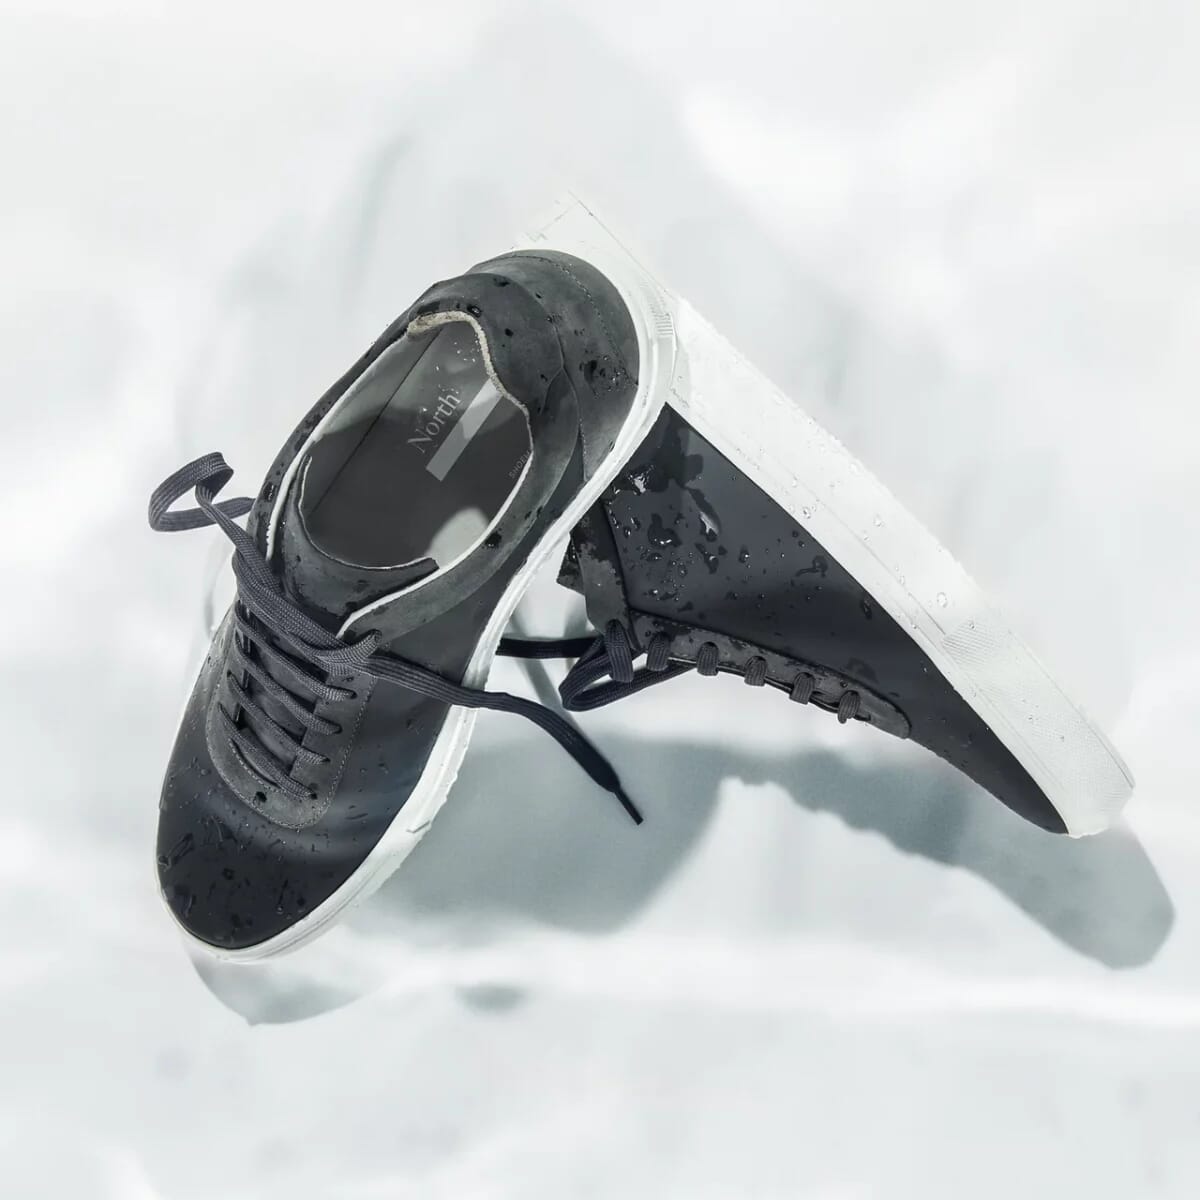 19 Best Waterproof Shoes & Sneakers For Men (Ranking)